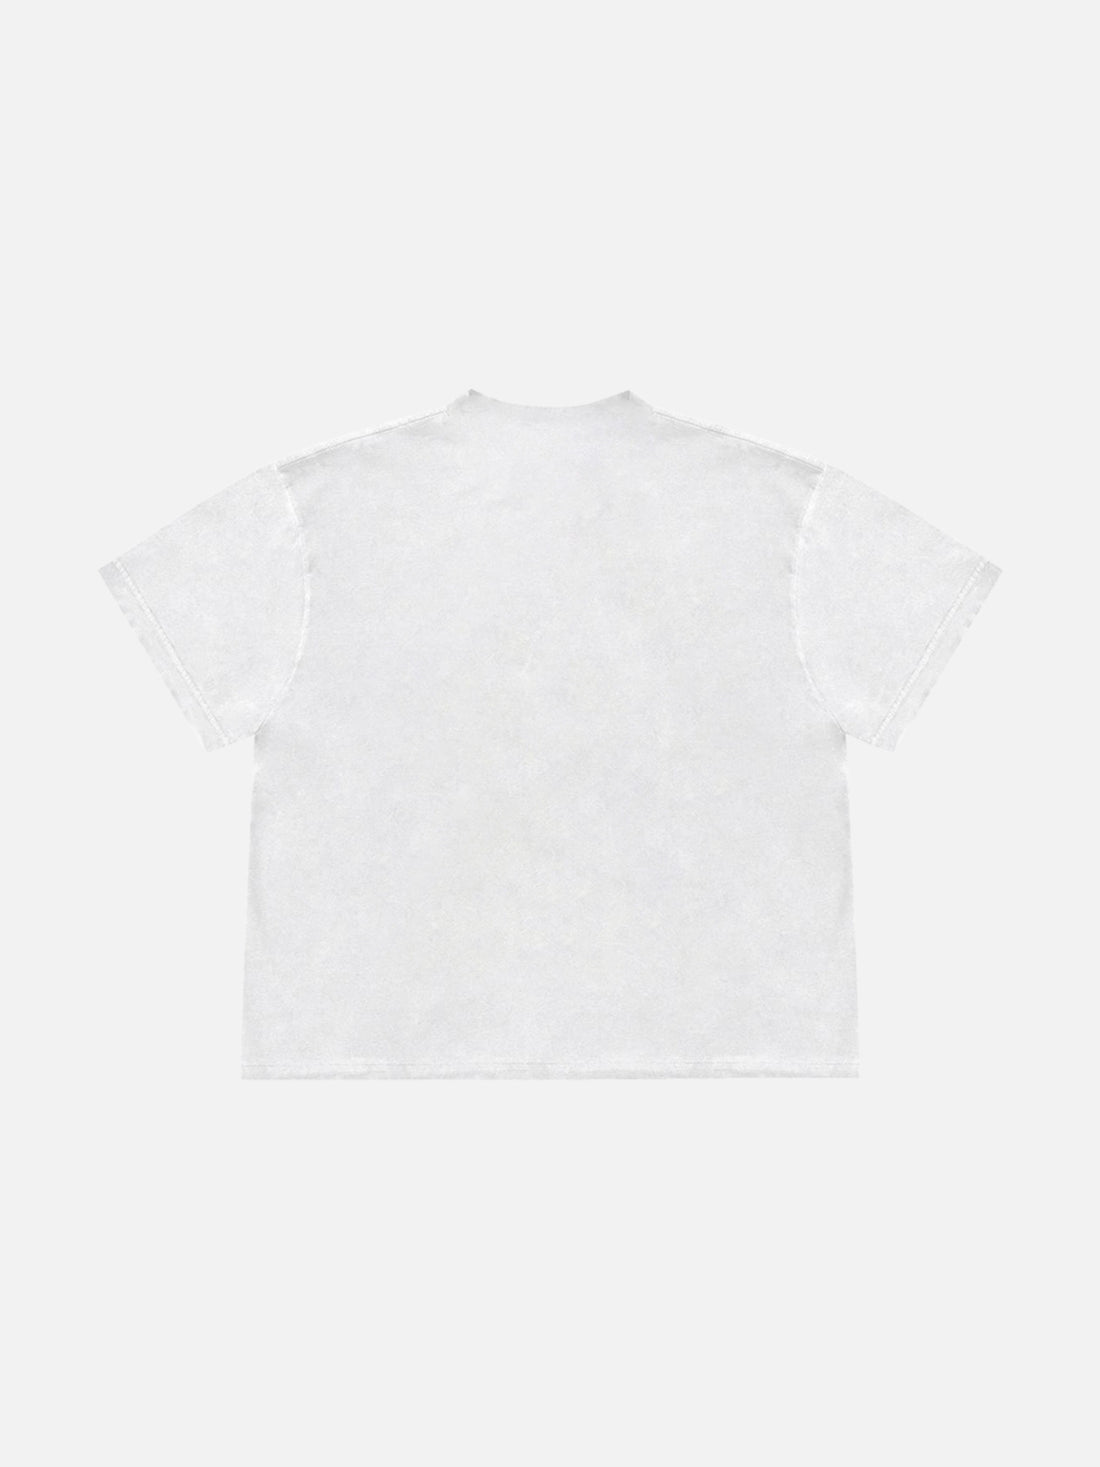 TROUBLEMAKER - Oversized Print T-Shirt White | Teenwear.eu